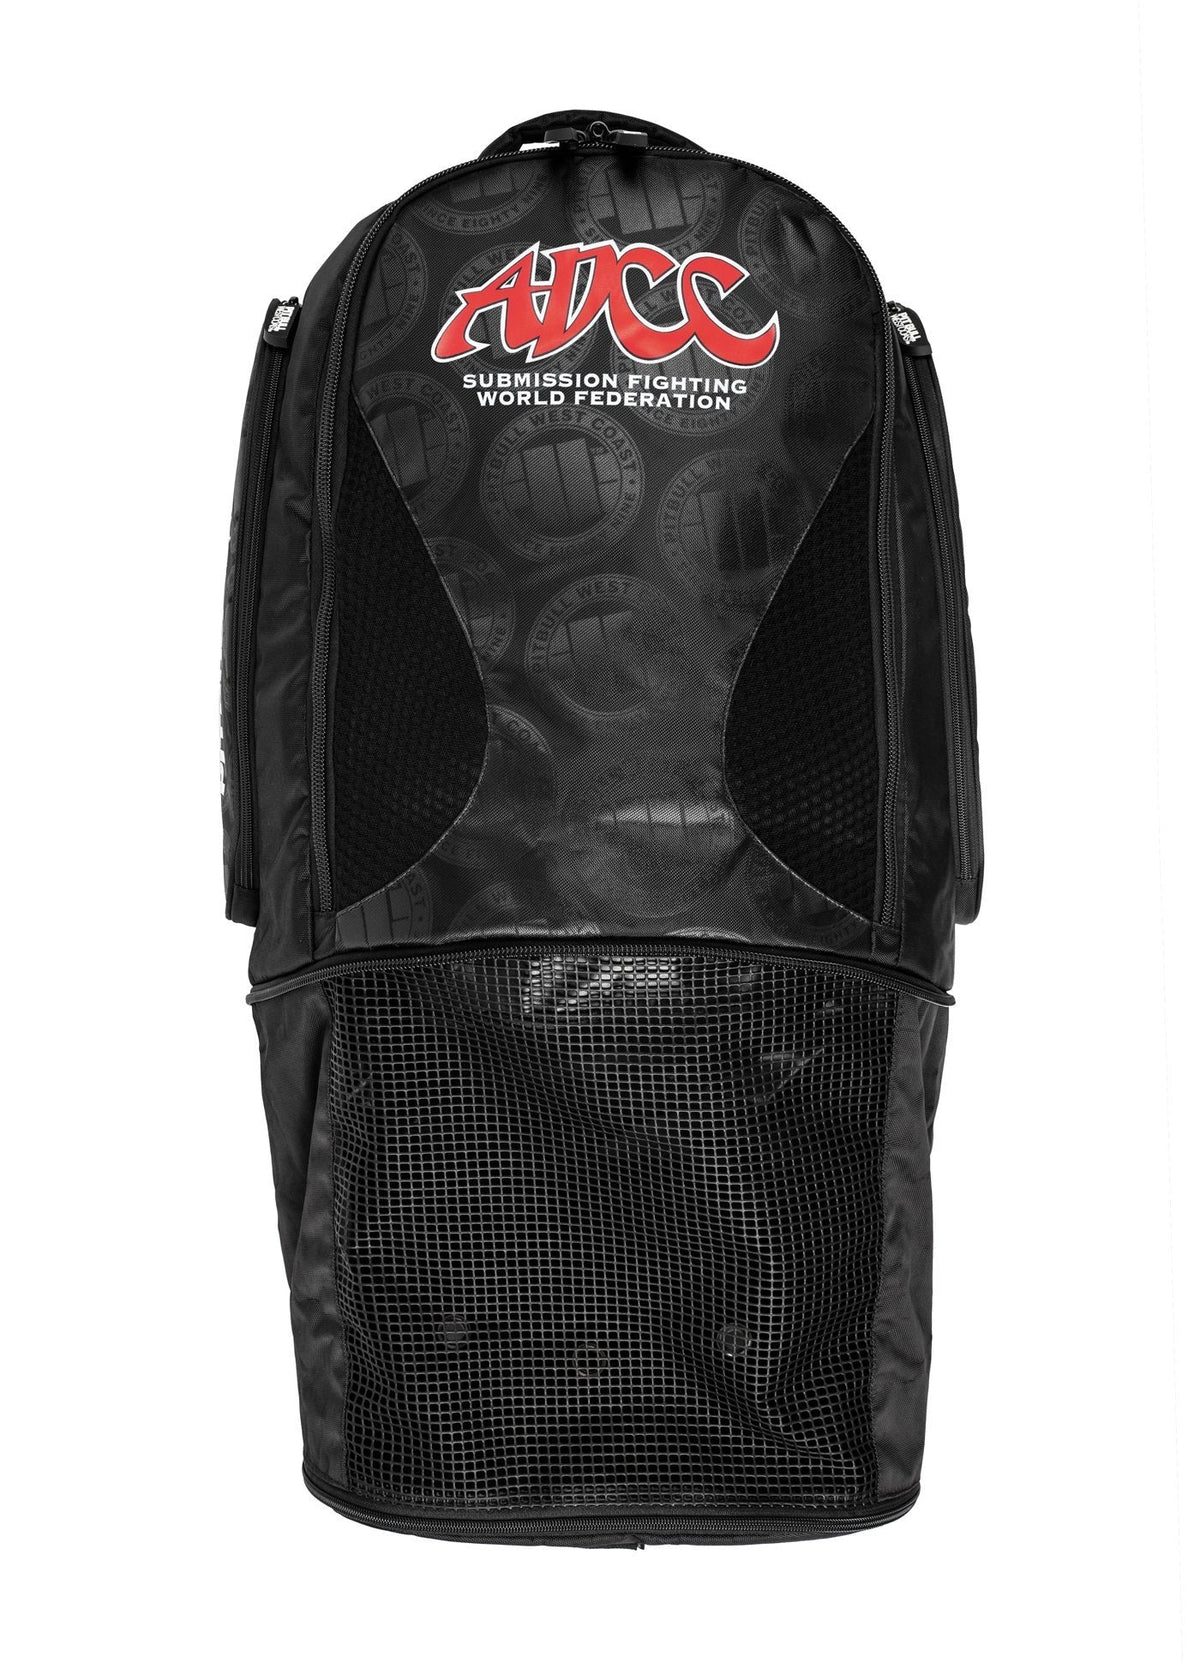 ADCC Black Big Training Backpack